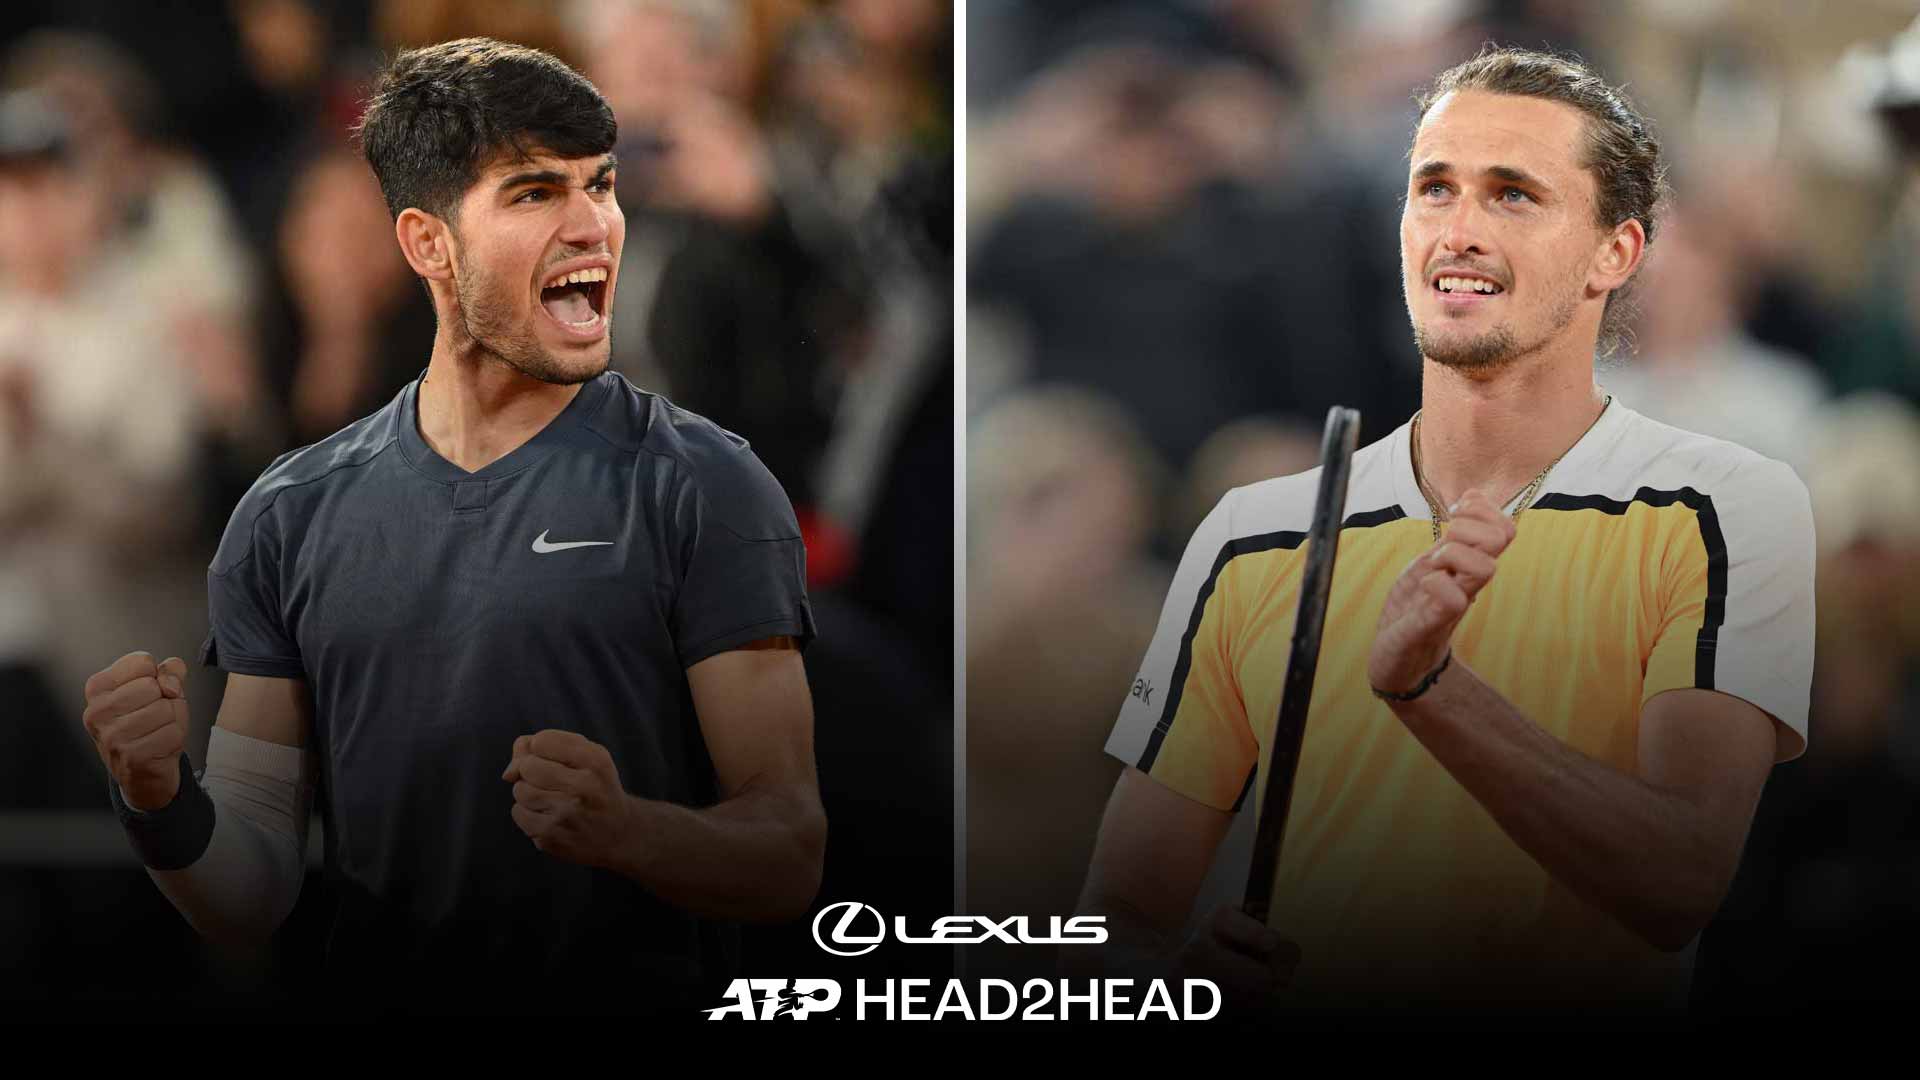 Carlos Alcaraz and Alexander Zverev both seek their first Roland Garros title.